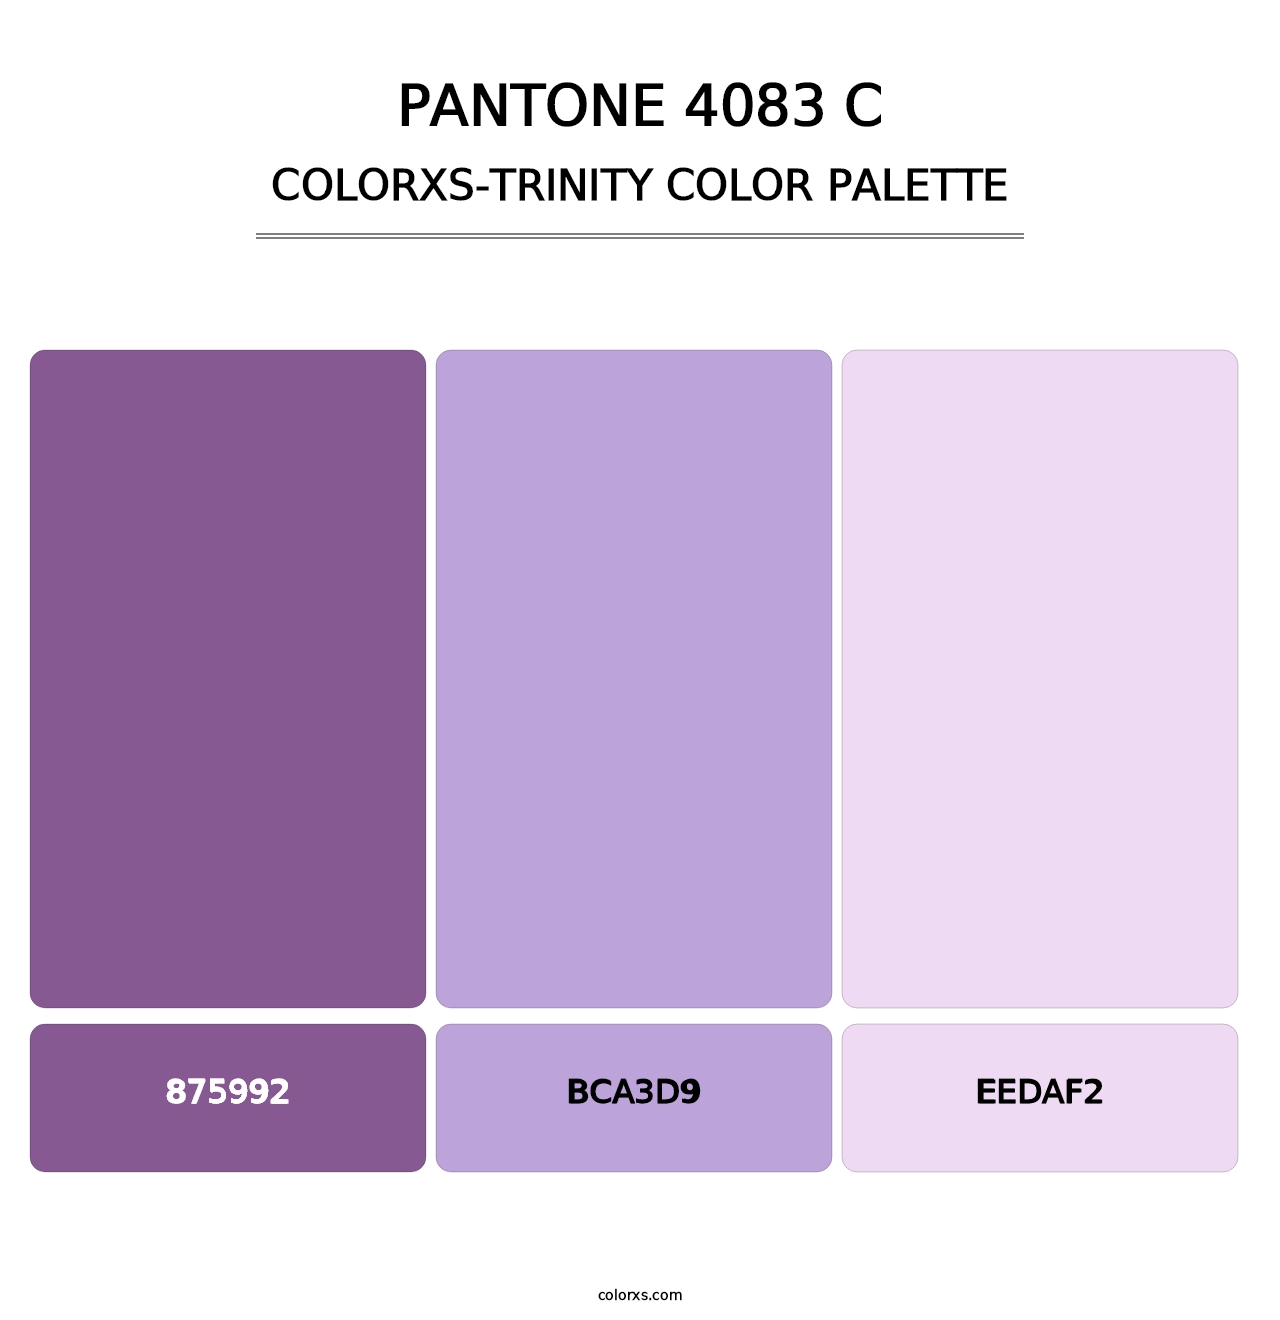 PANTONE 4083 C - Colorxs Trinity Palette